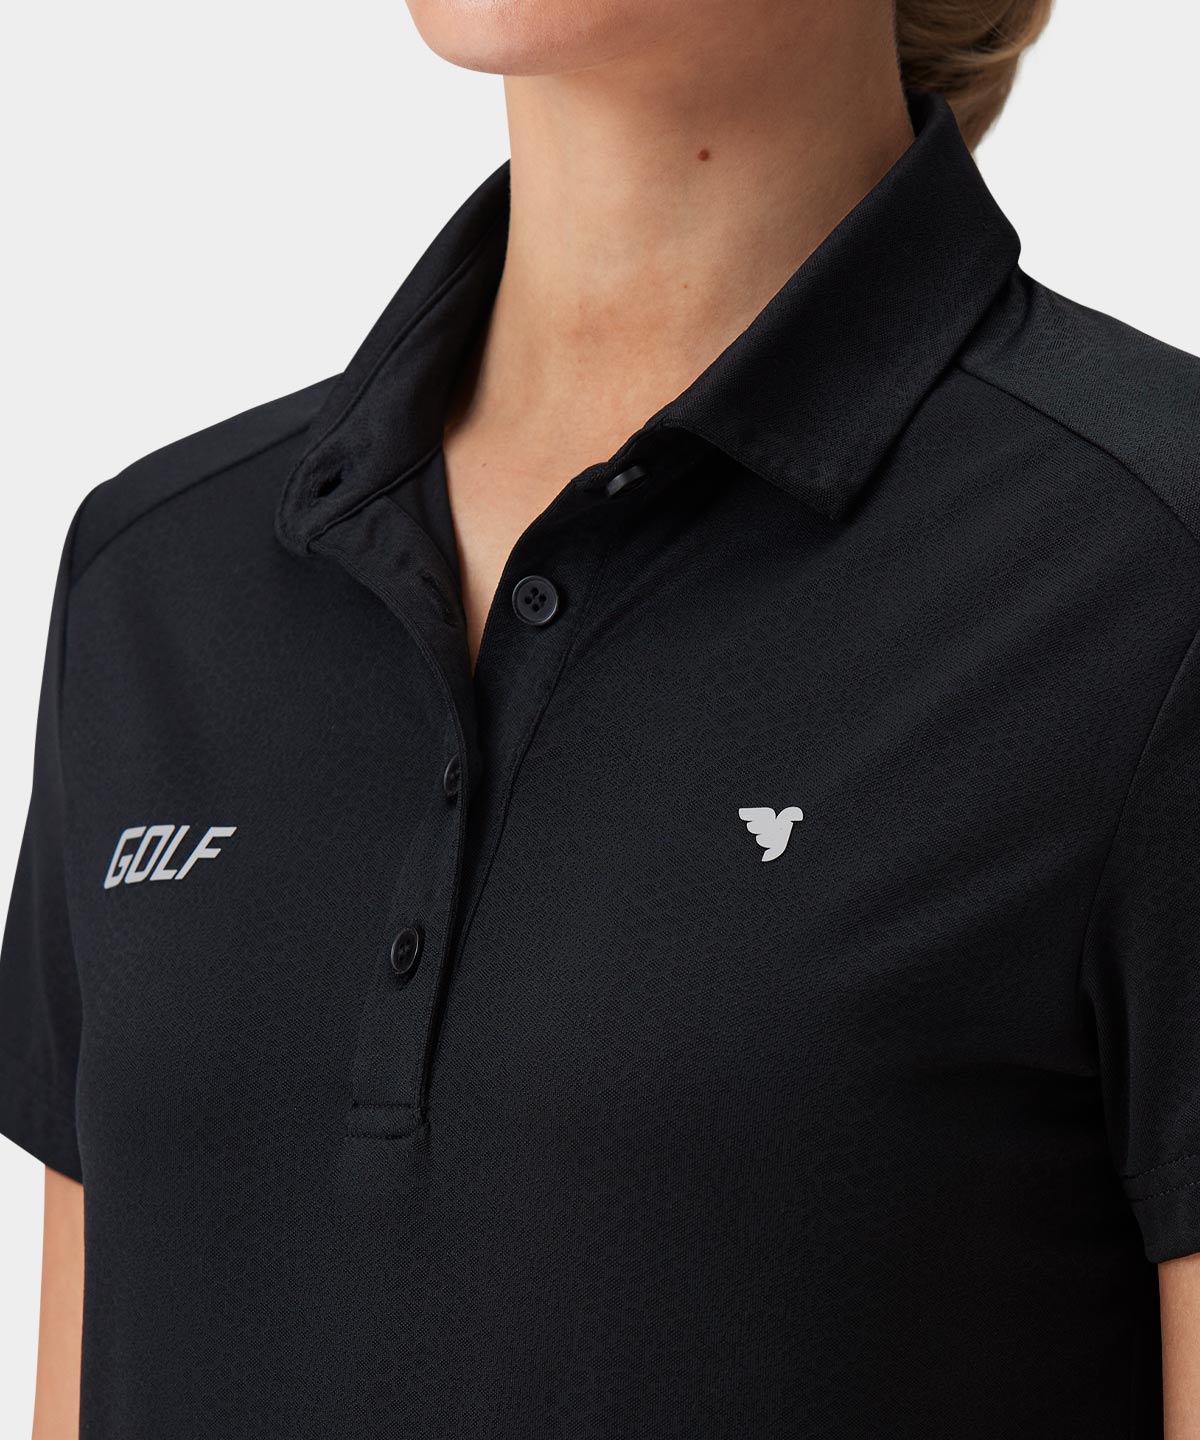 Gaia Black Performance Shirt Macade Golf